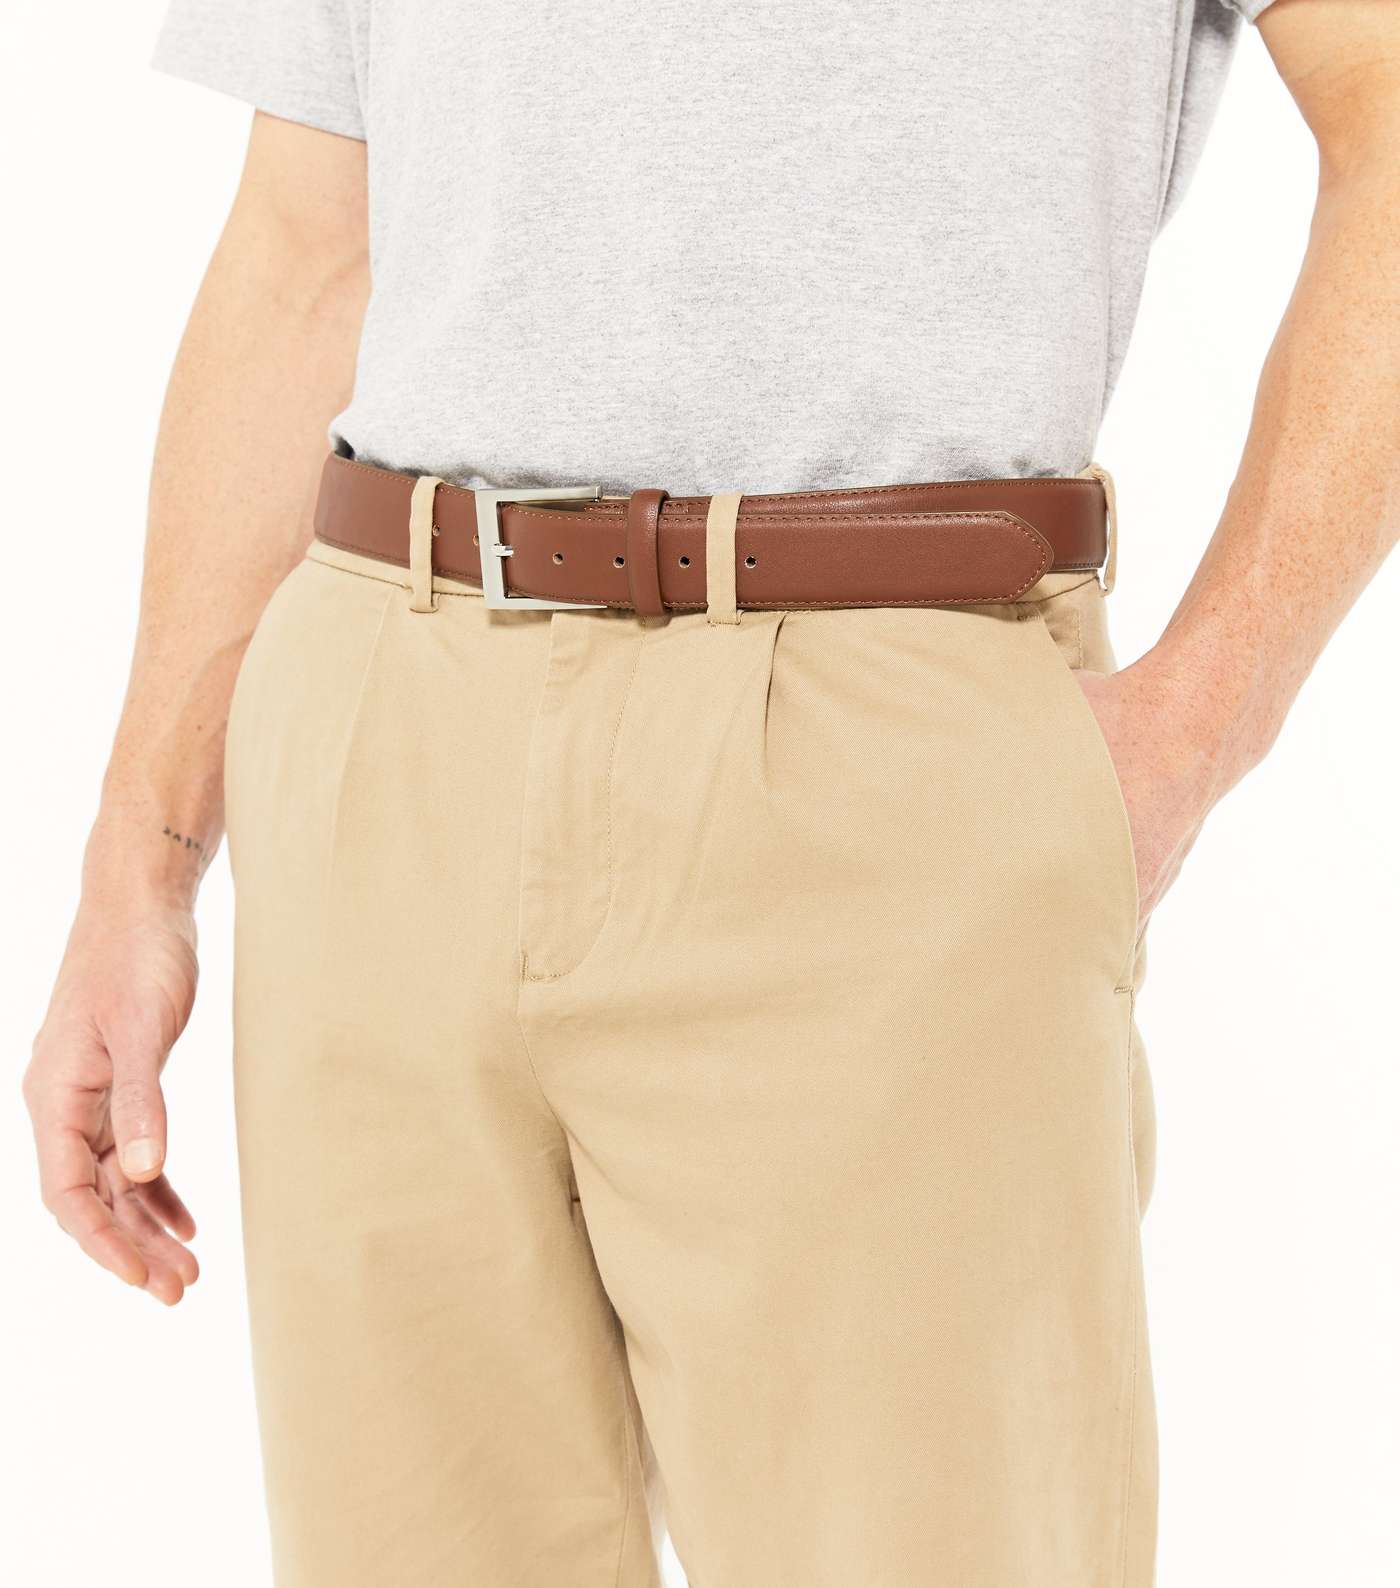 Tan Leather-Look Formal Belt Image 2